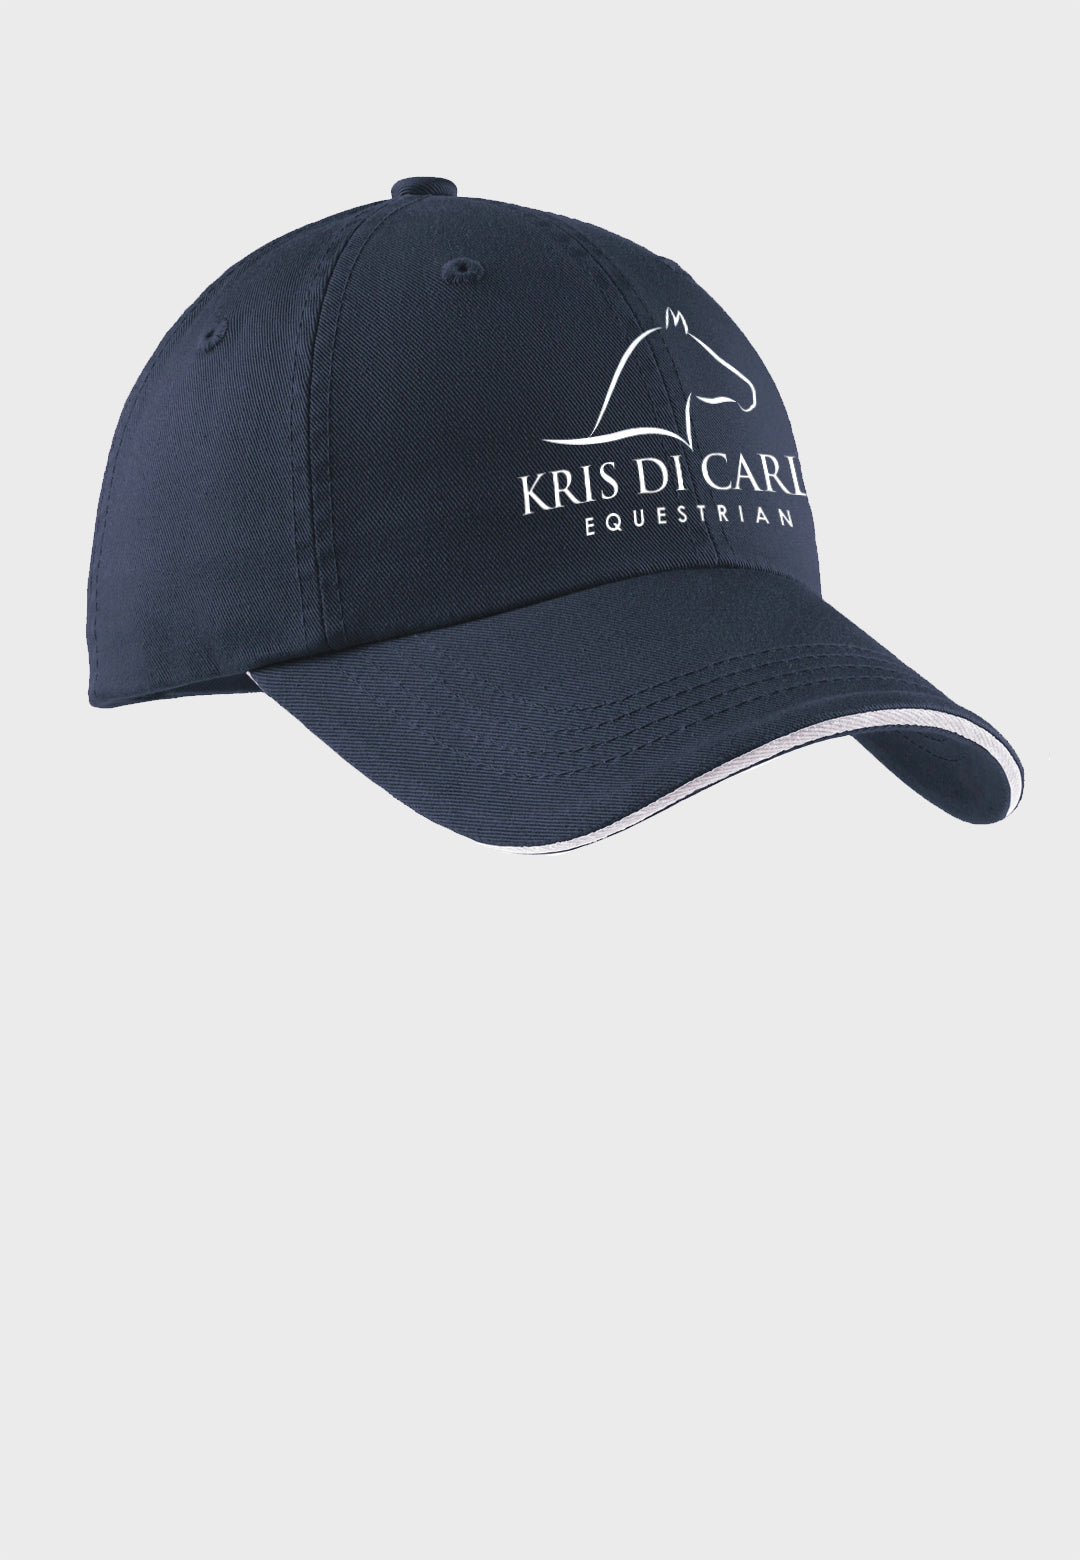 Kris Di Carlo Equestrian Port Authority® Sandwich Bill Cap with Striped Closure